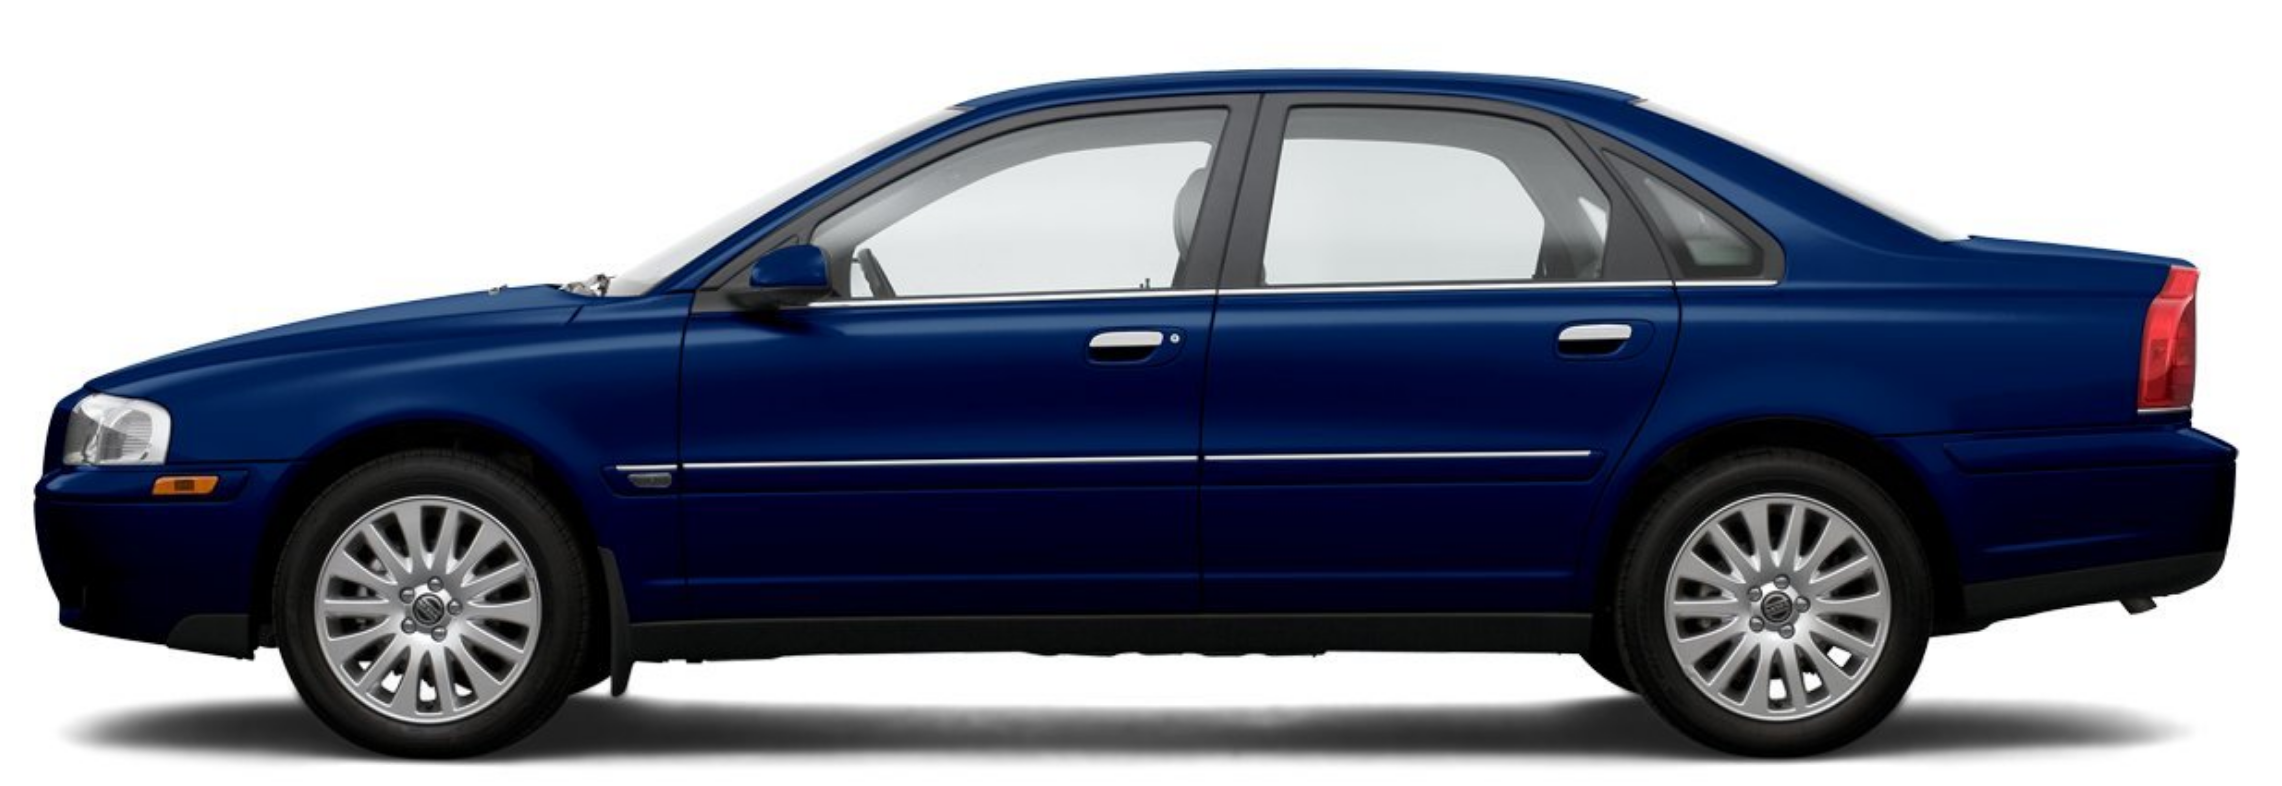 Afbeelding van 98SGDF, blauwe Volvo S80 T6 Geartronic Executive sedan